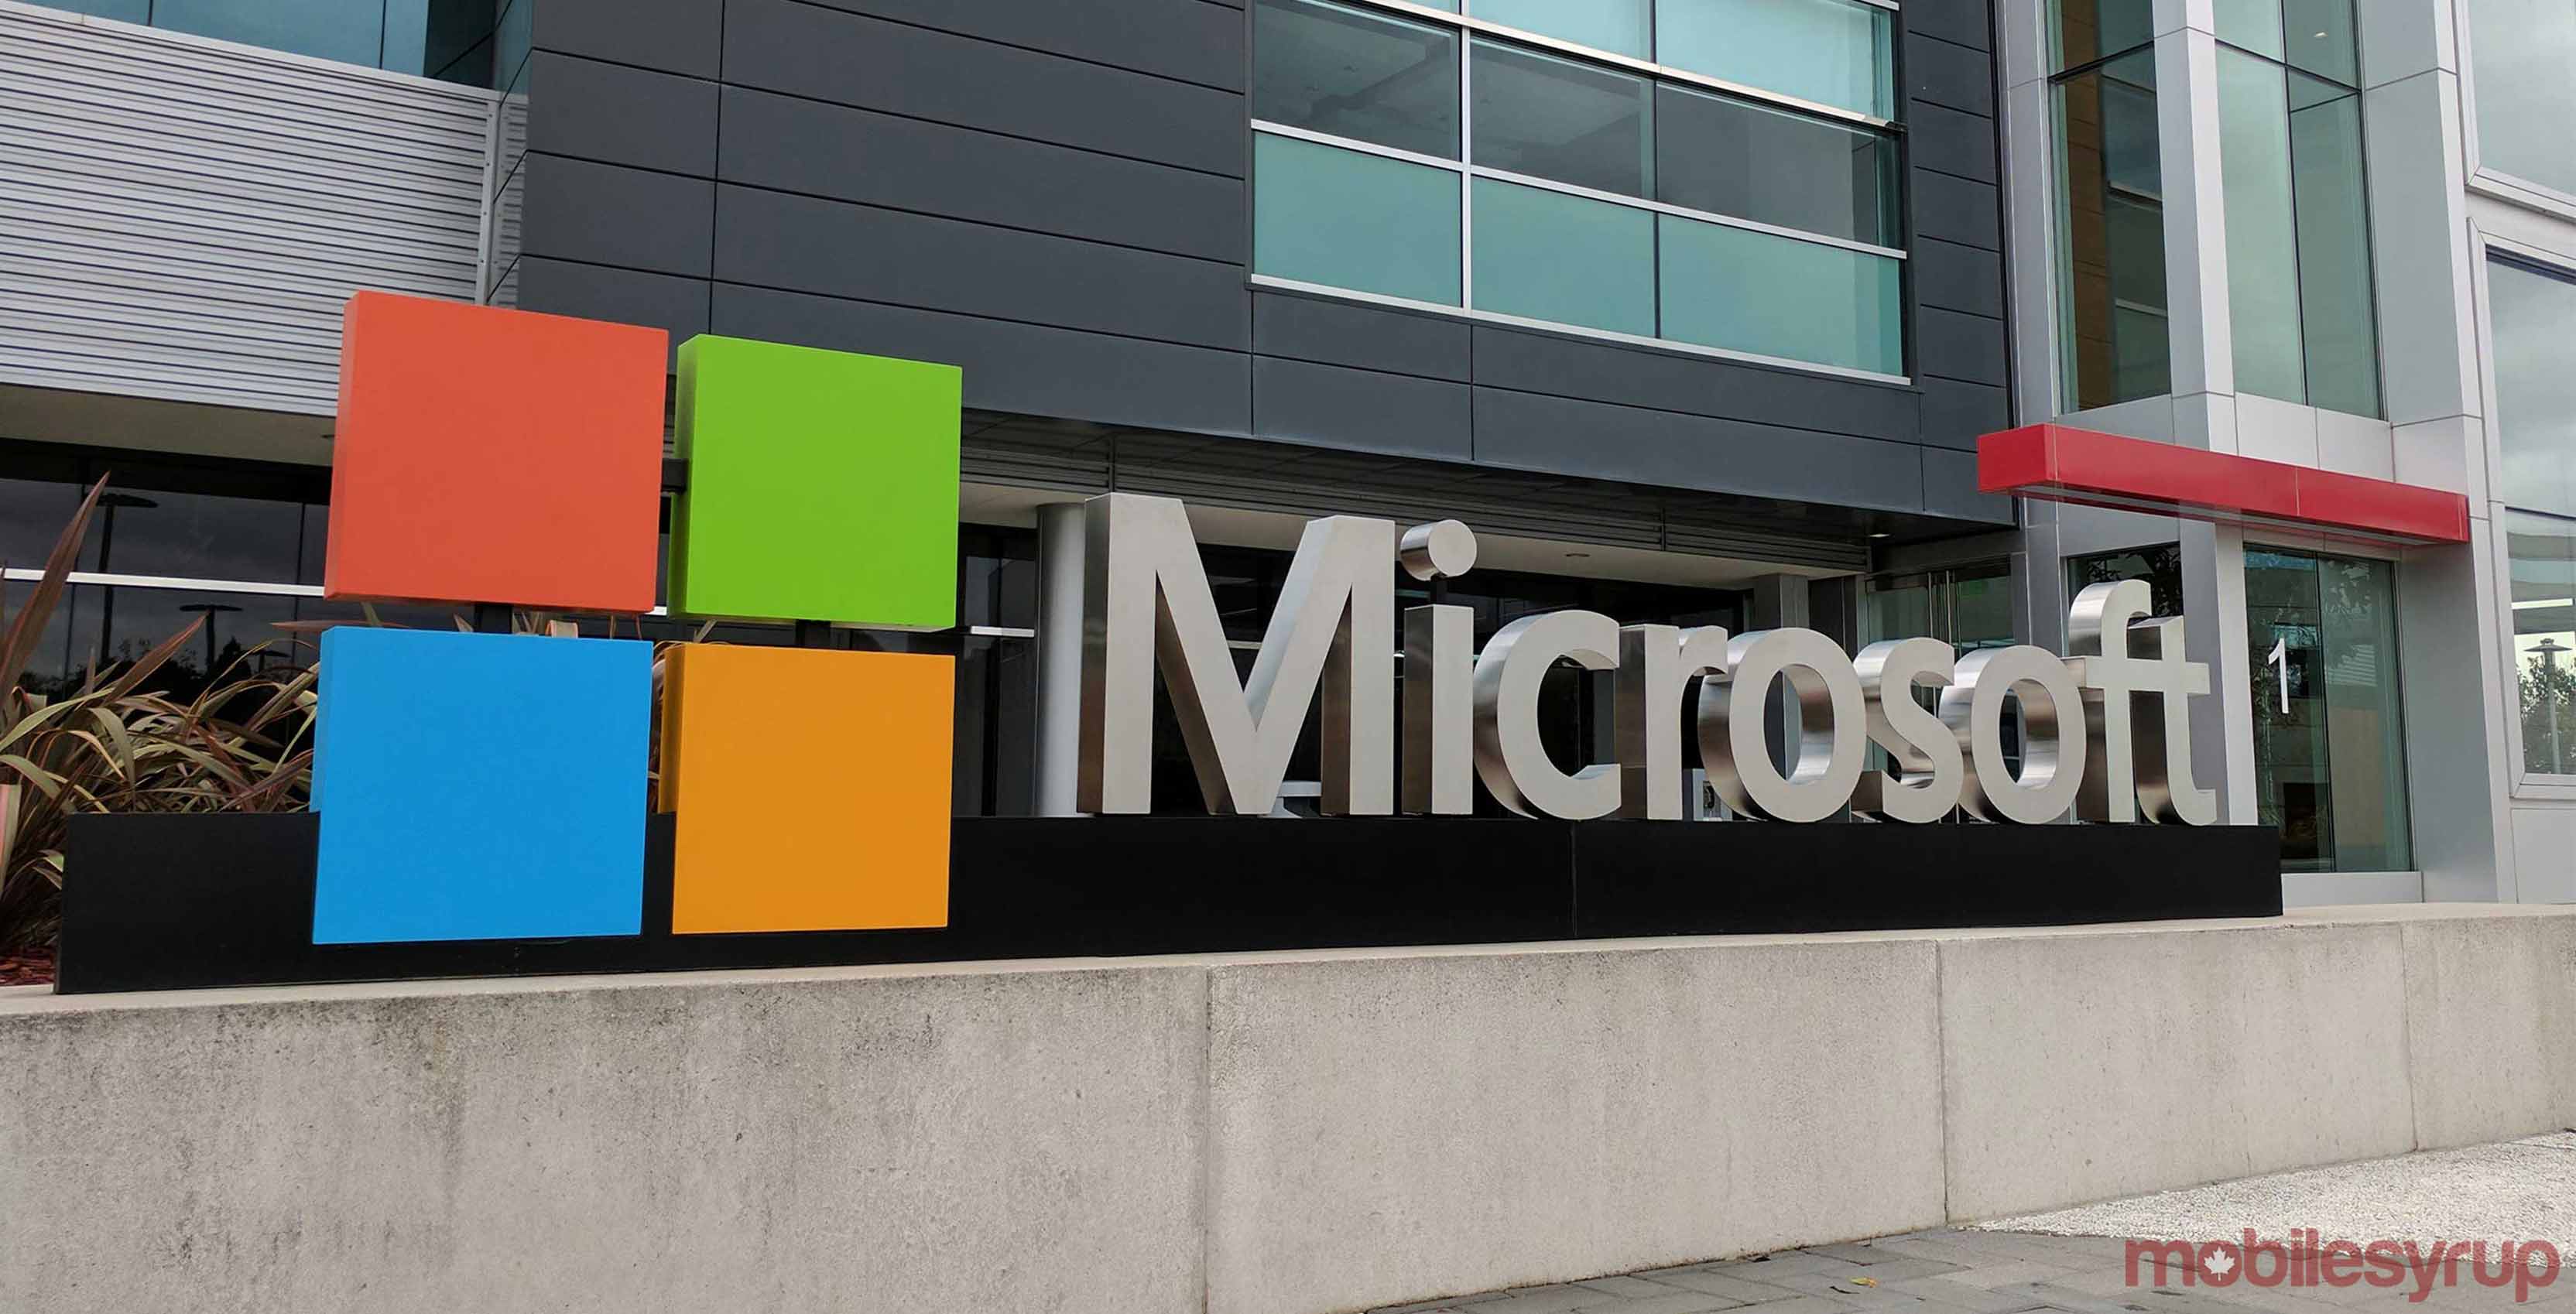 Microsoft logo on building - Microsoft service outage